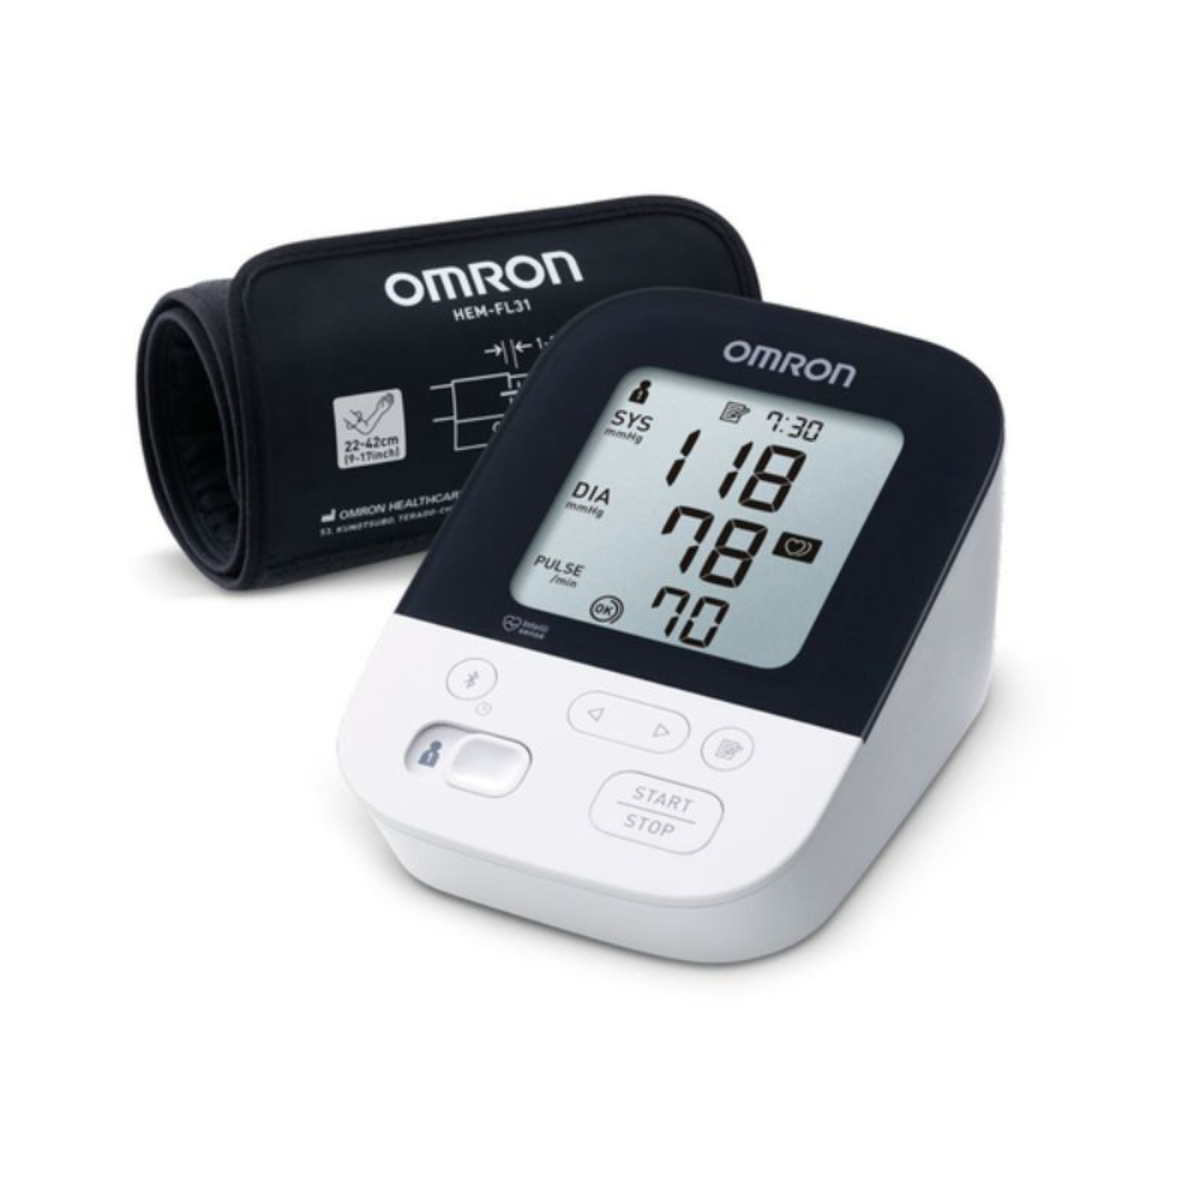 Omron M4 Intelli IT Upper Arm Blood Pressure Monitor, Black White, HEM-7155T-EBK